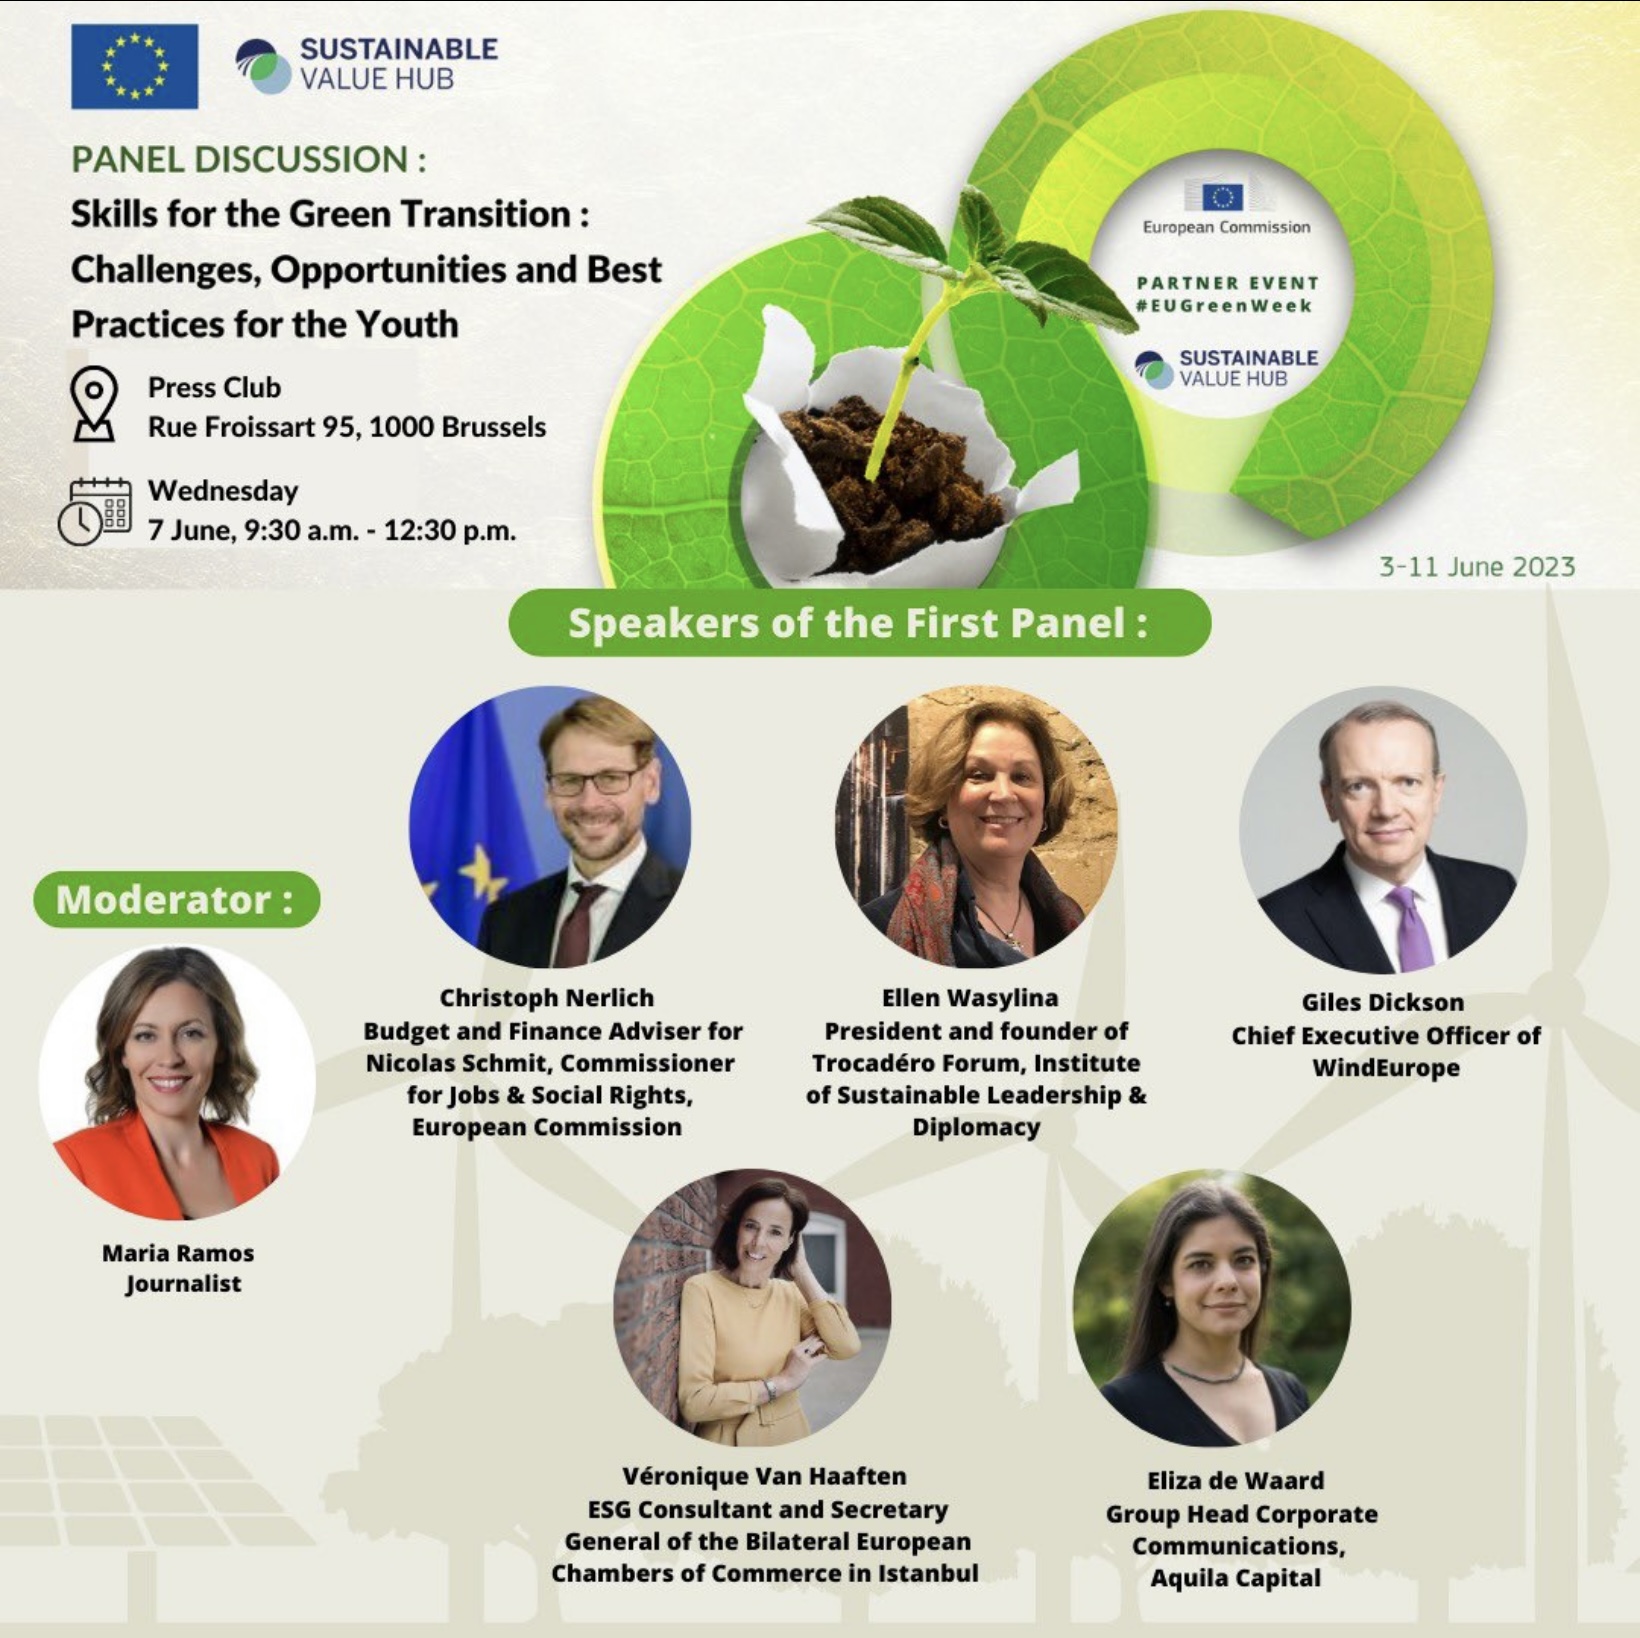 Ellen Wasylina spoke at 2 EU Green Week events